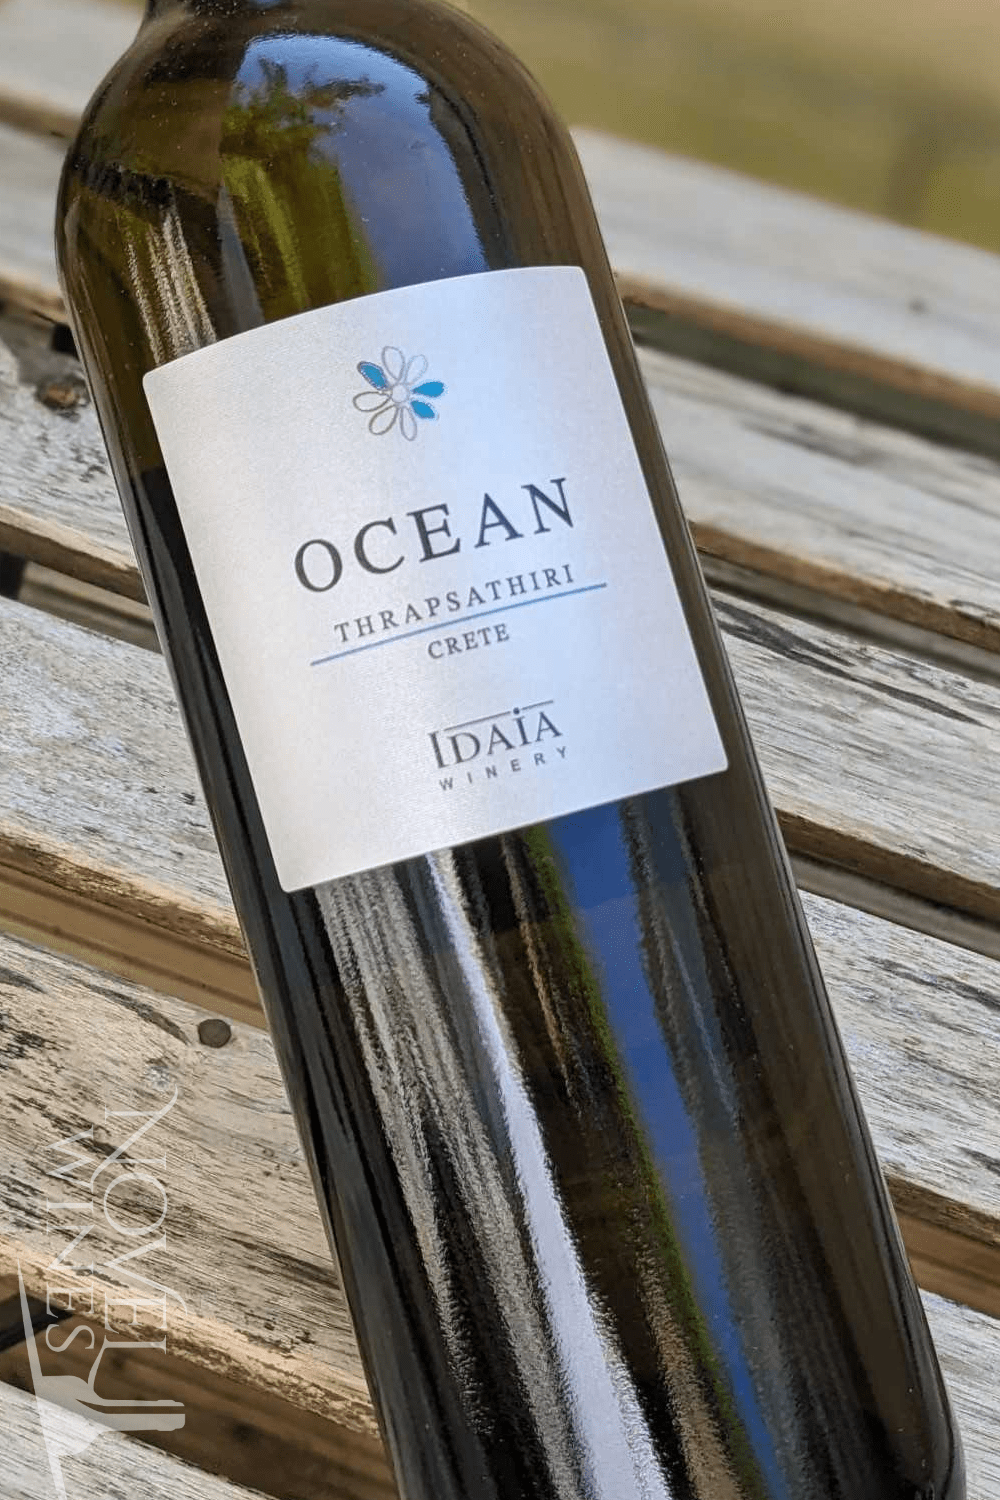 Idaia Winery White Wine Idaia Dafnes Thrapsathiri 'Ocean' 2022, Greece